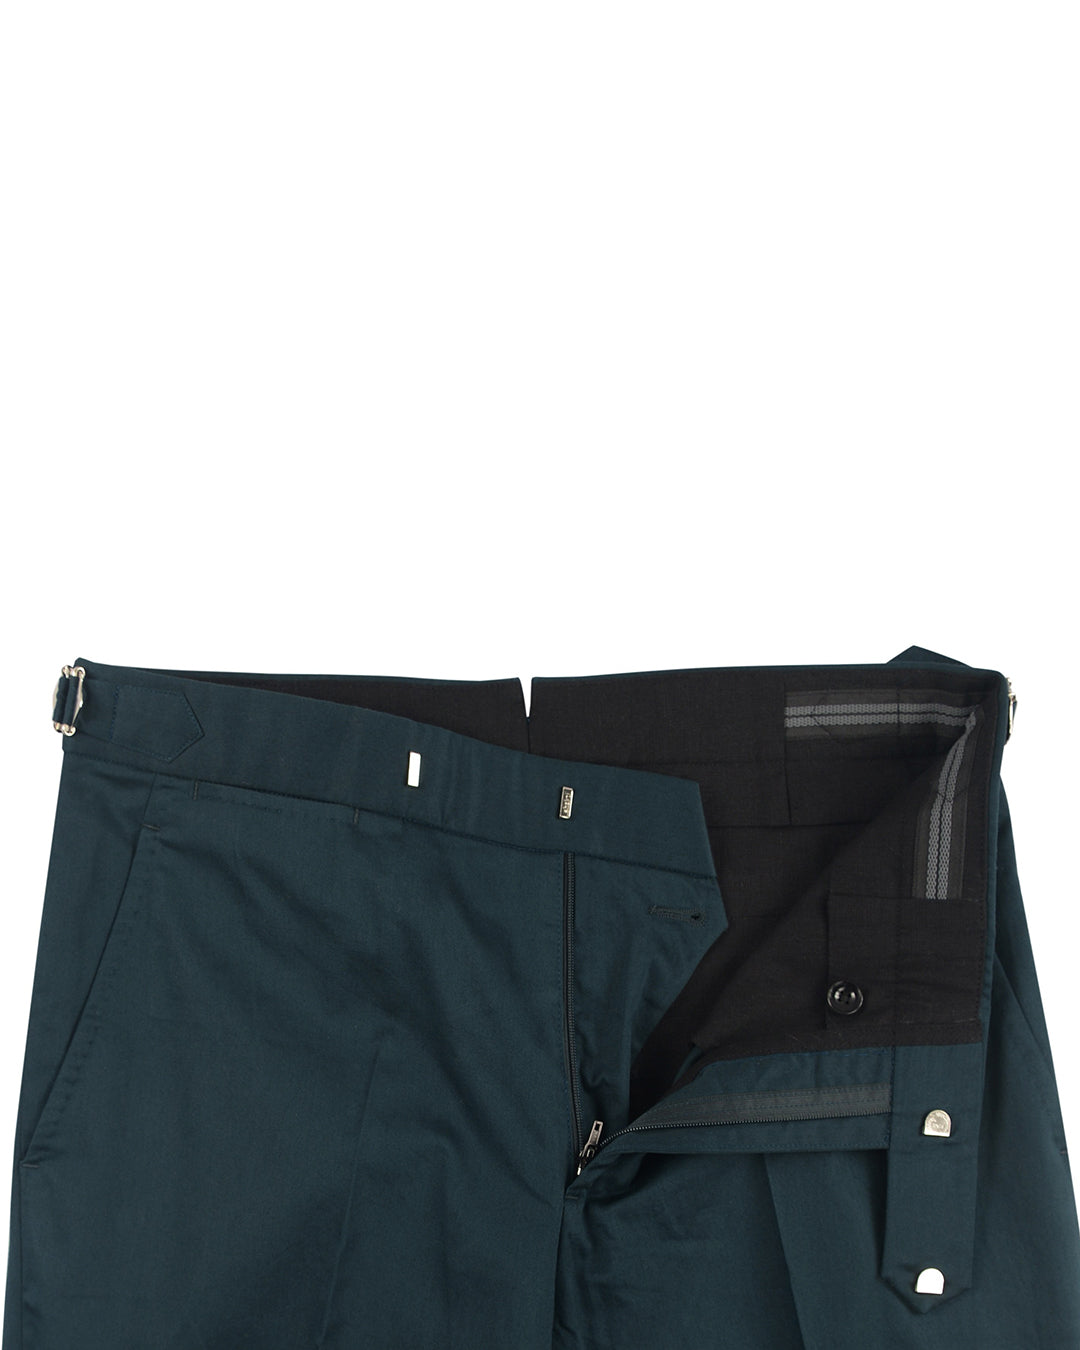 Graphite Green Soft Cotton Pant